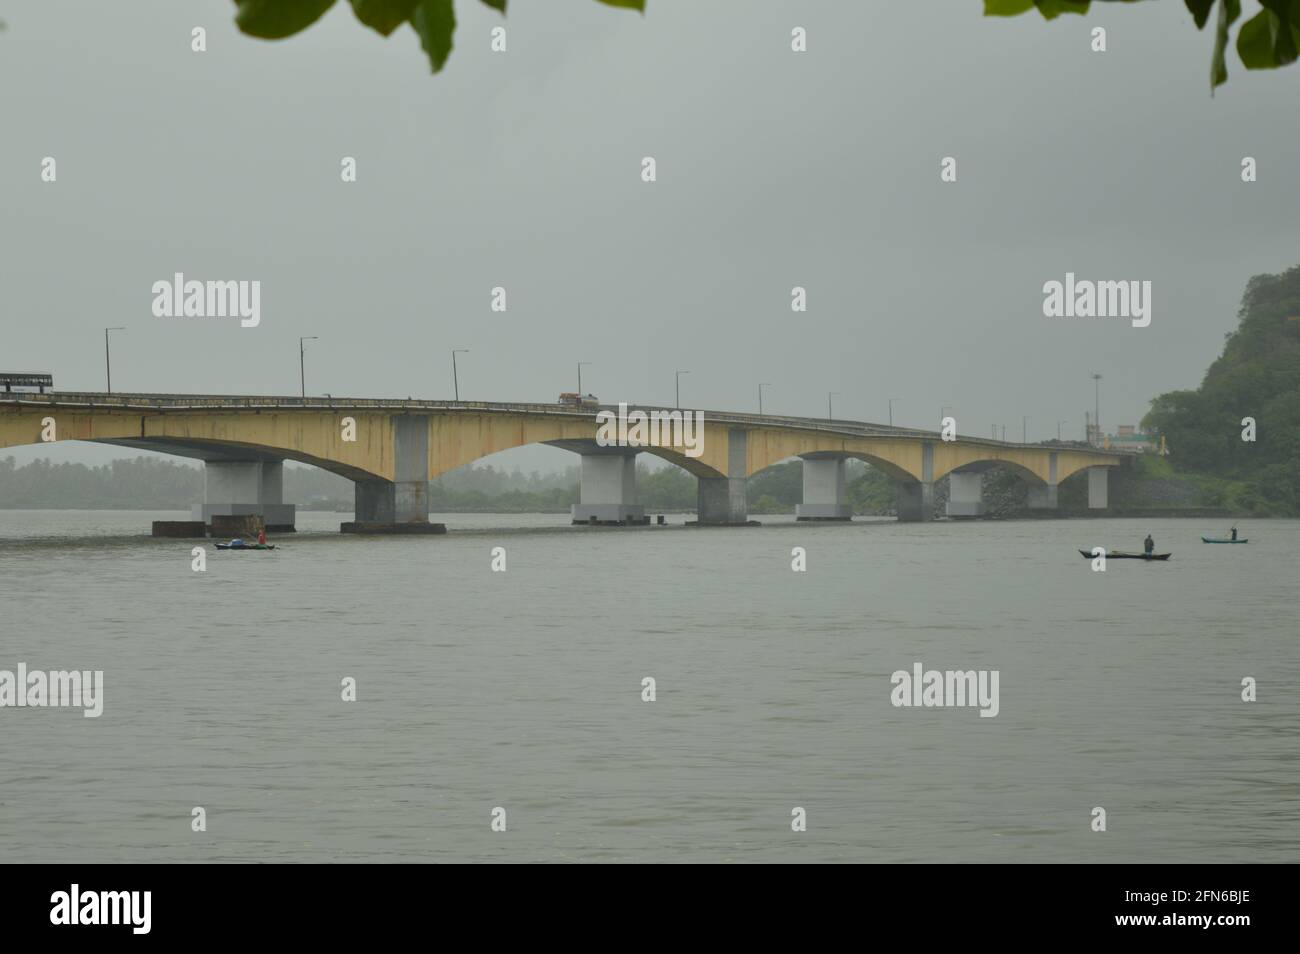 Ponte fluviale Khali, karwar, karnataka, India Foto Stock